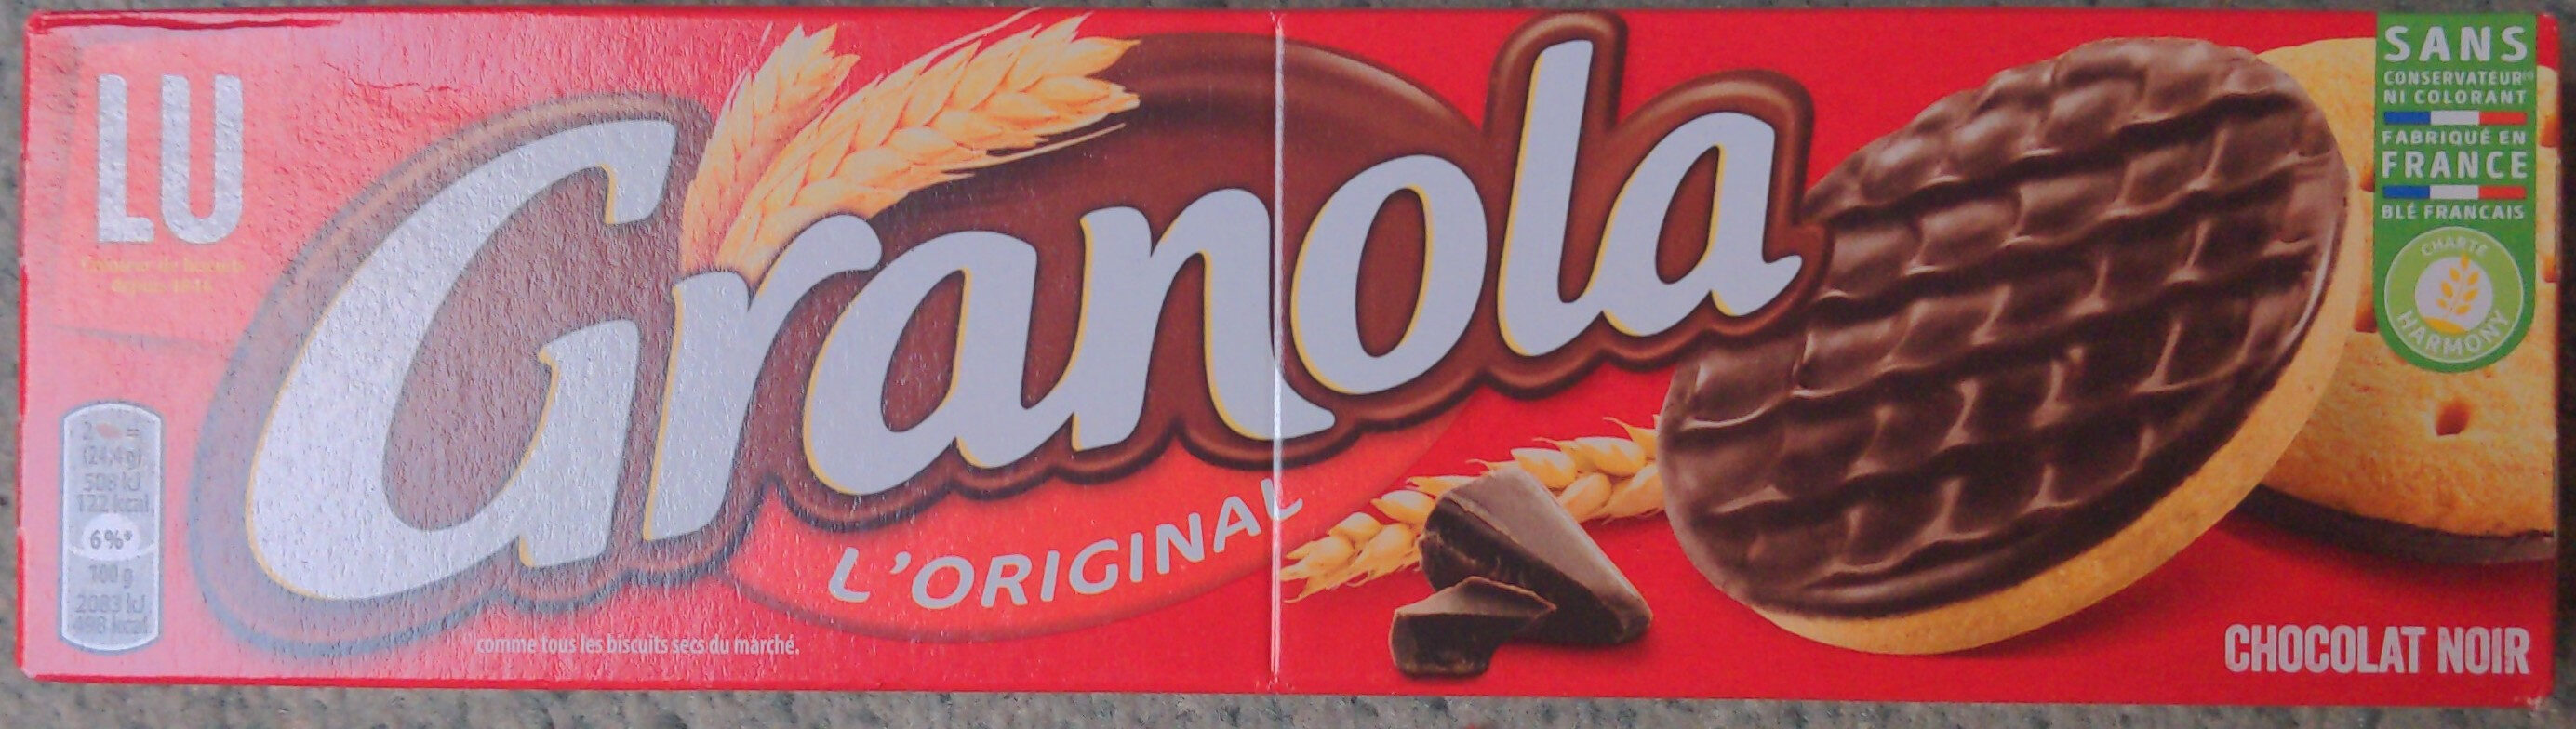 Granola Chocolat Noir - Product - fr